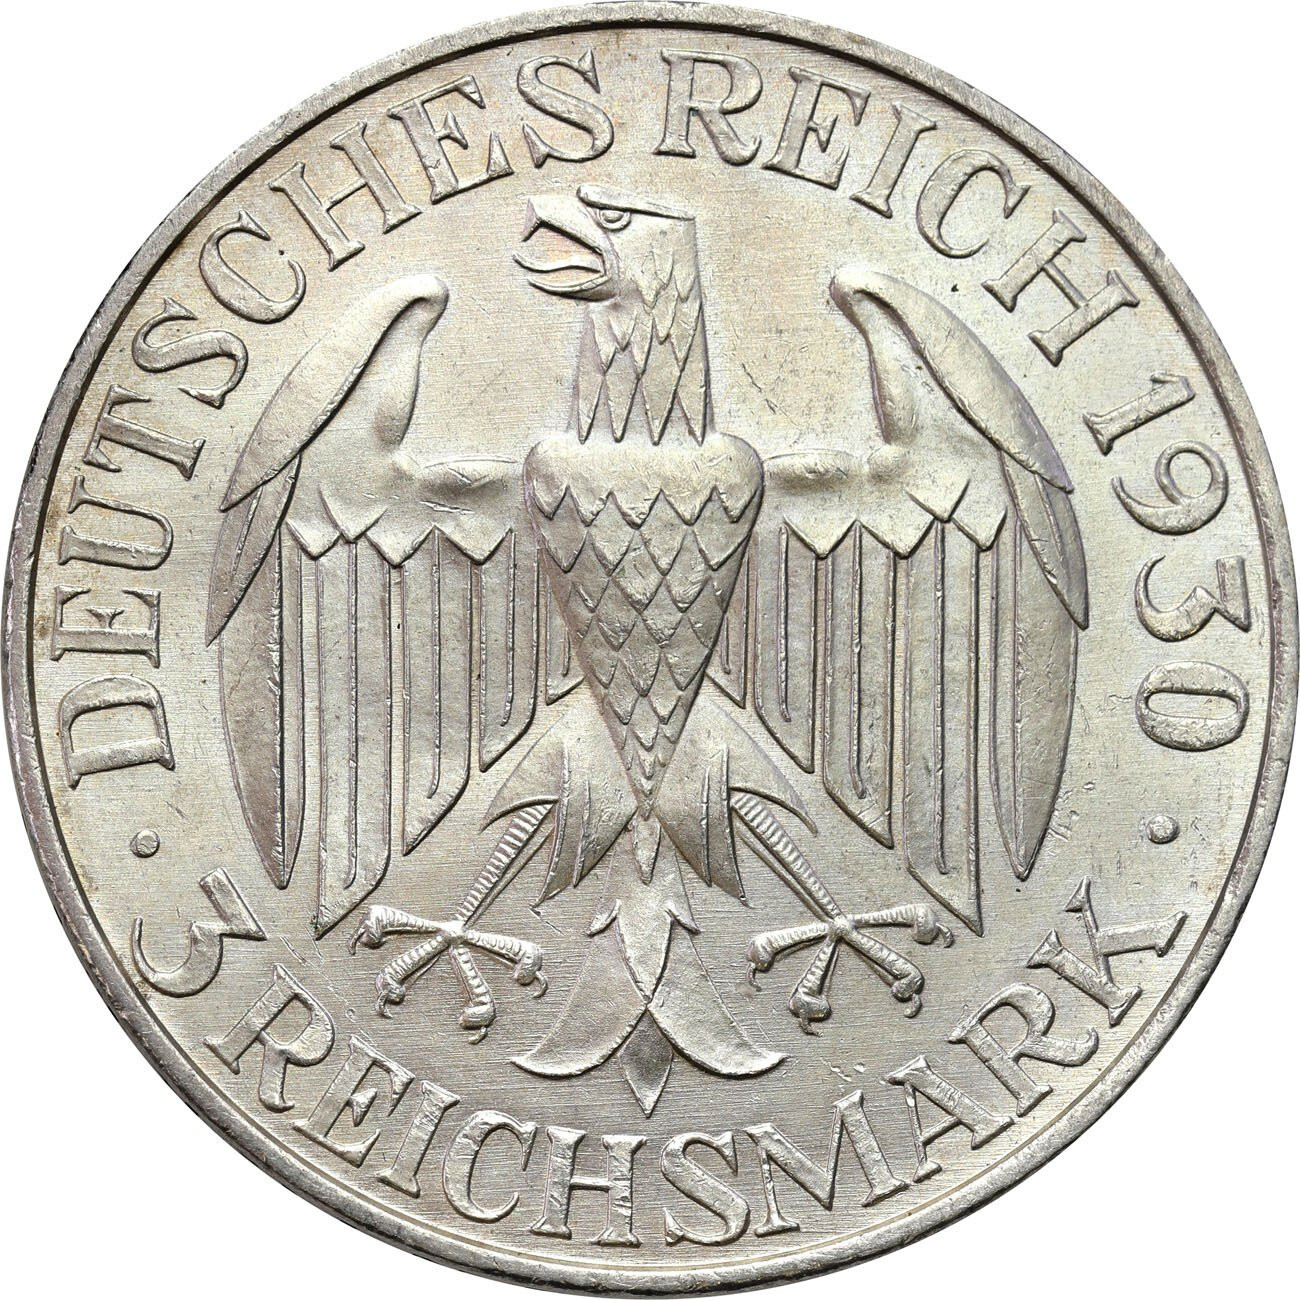 Niemcy, Weimar. 3 marki 1930 A, Berlin - Zeppelin – ŁADNE